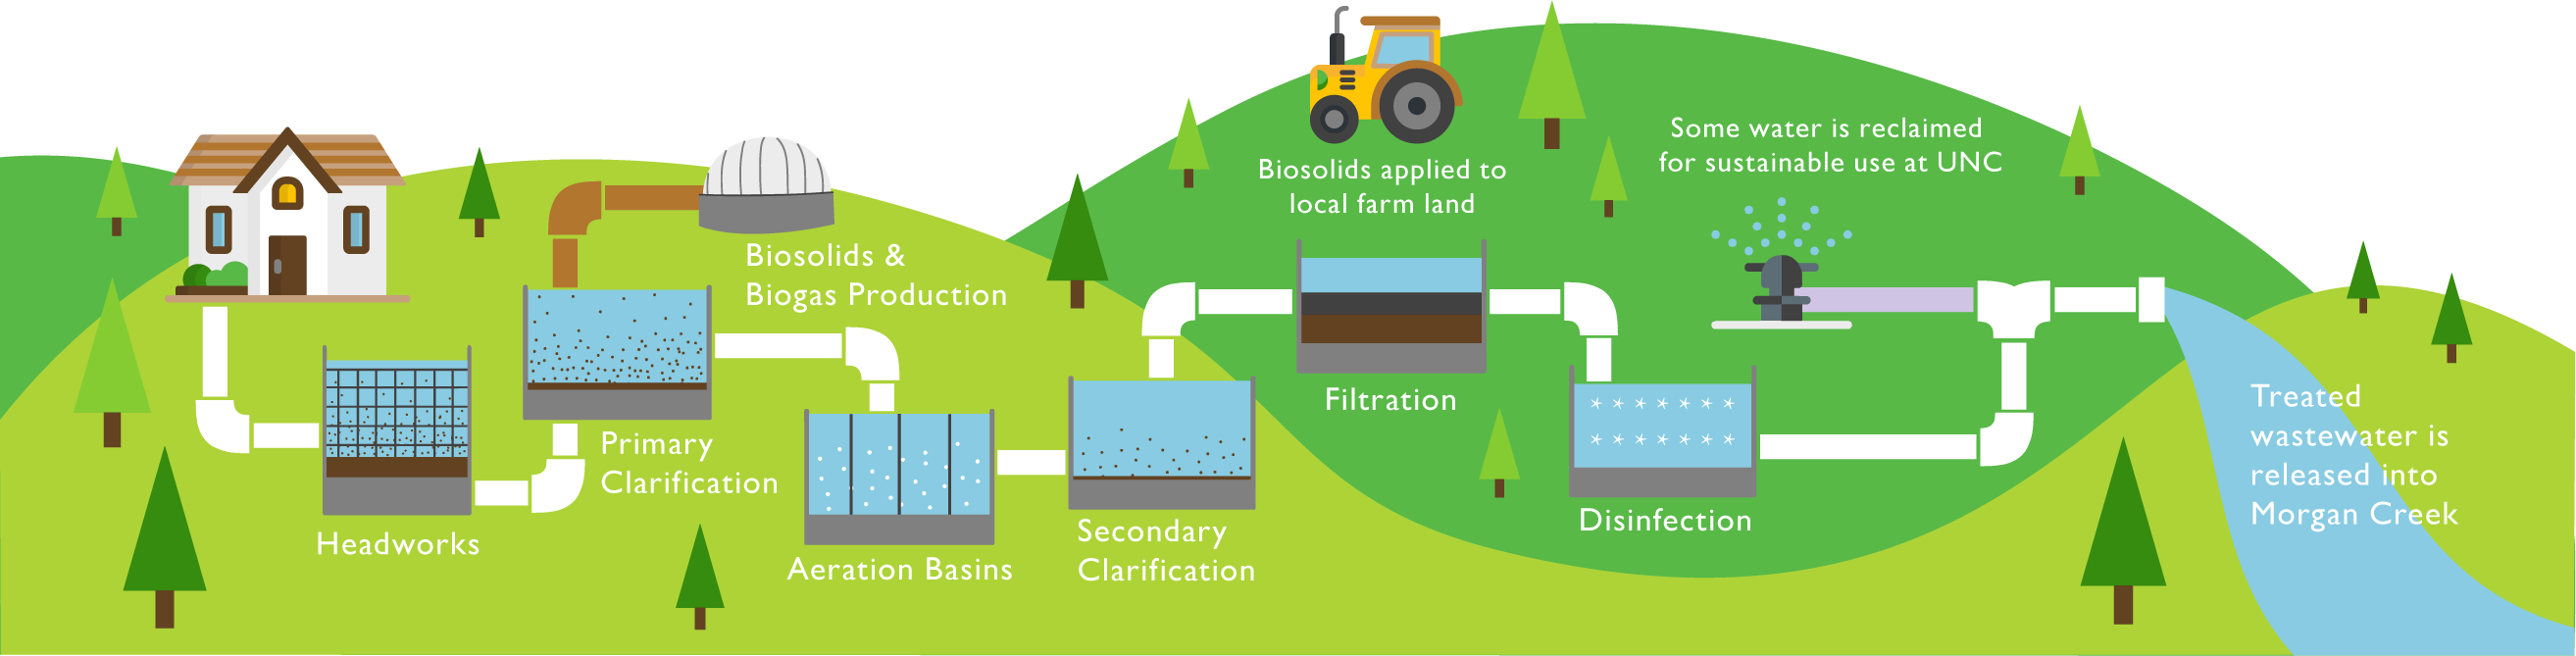 OWASA Waste Water Treatment Diagram